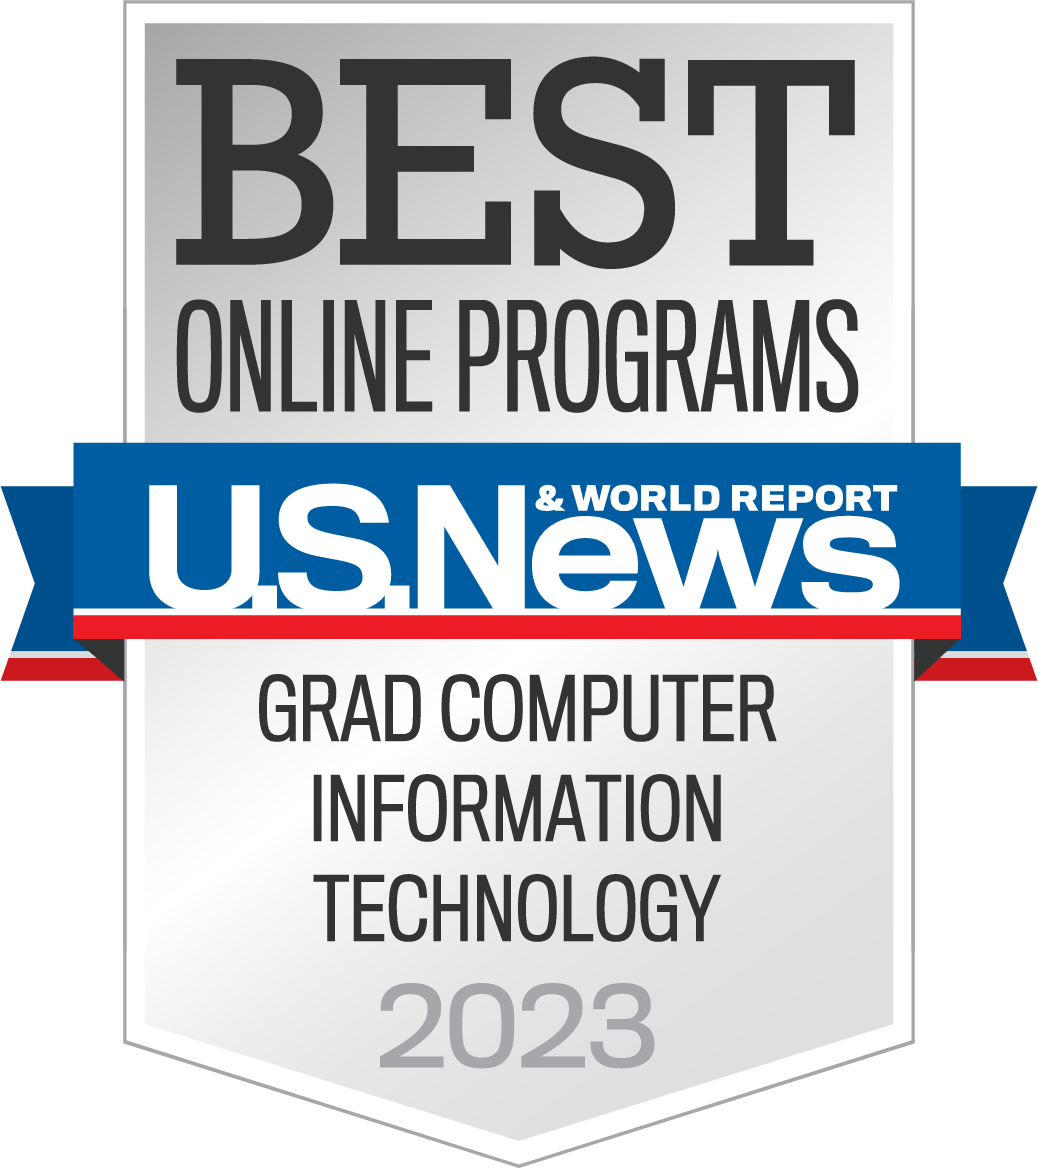 Best Online Programs U.S. News & World Reports Graduate Computer Information Technology